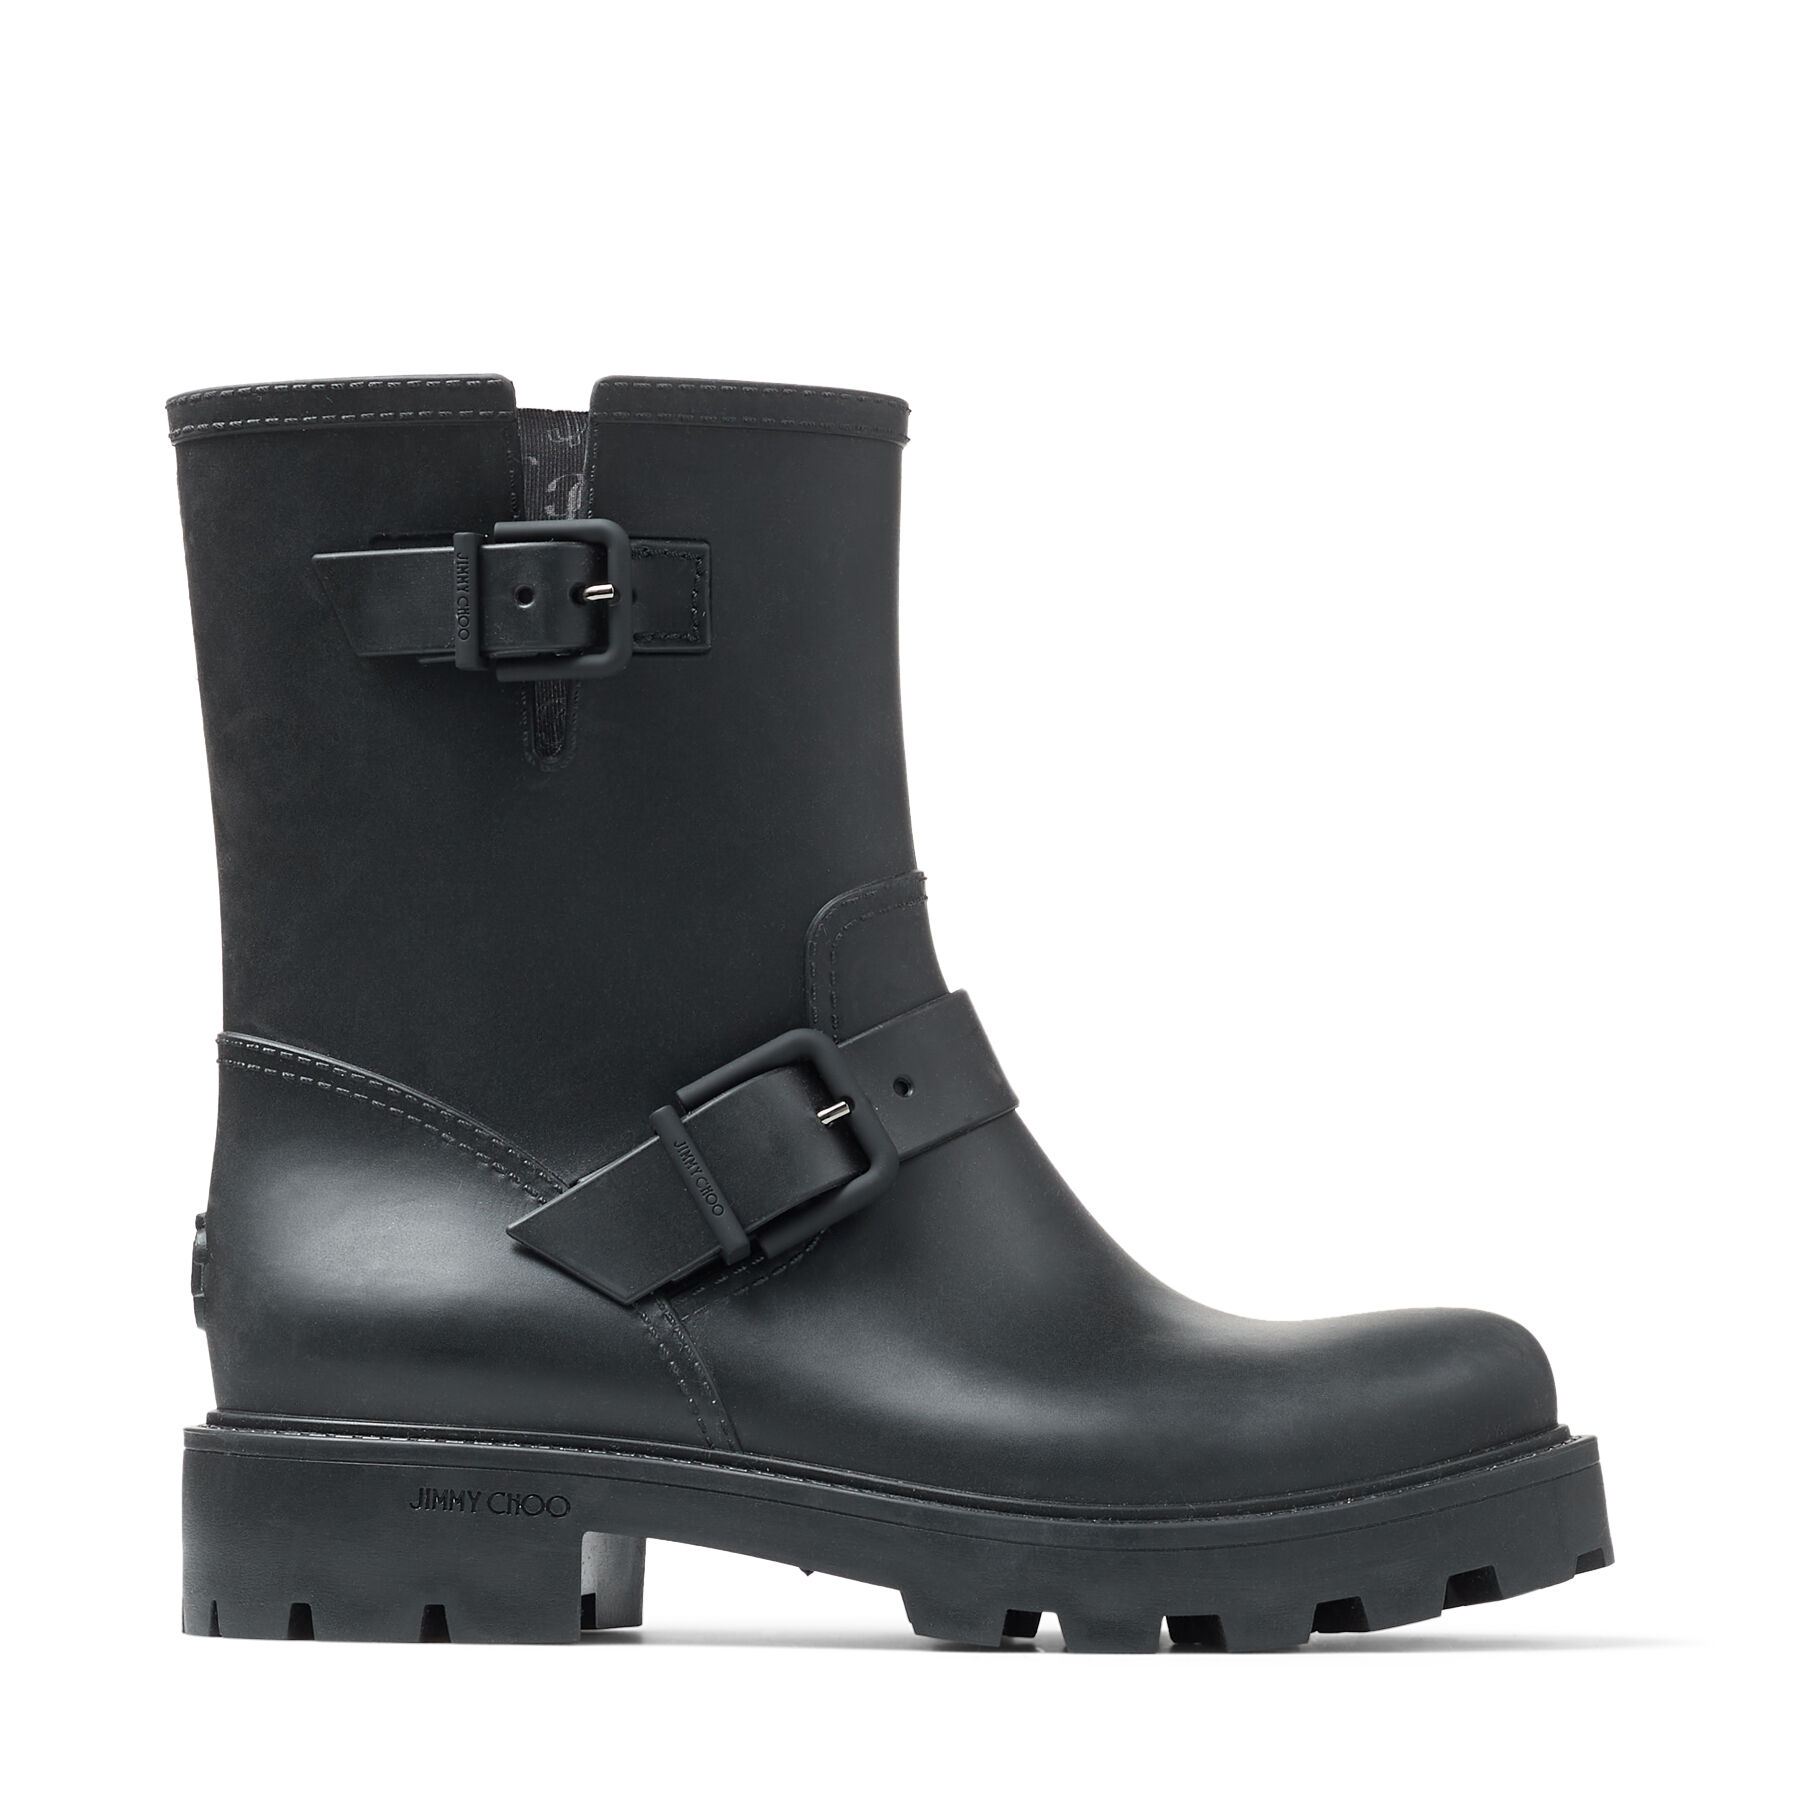 Black Biodegradable Rubber Rain Boots | YAEL FLAT | Winter 2021 